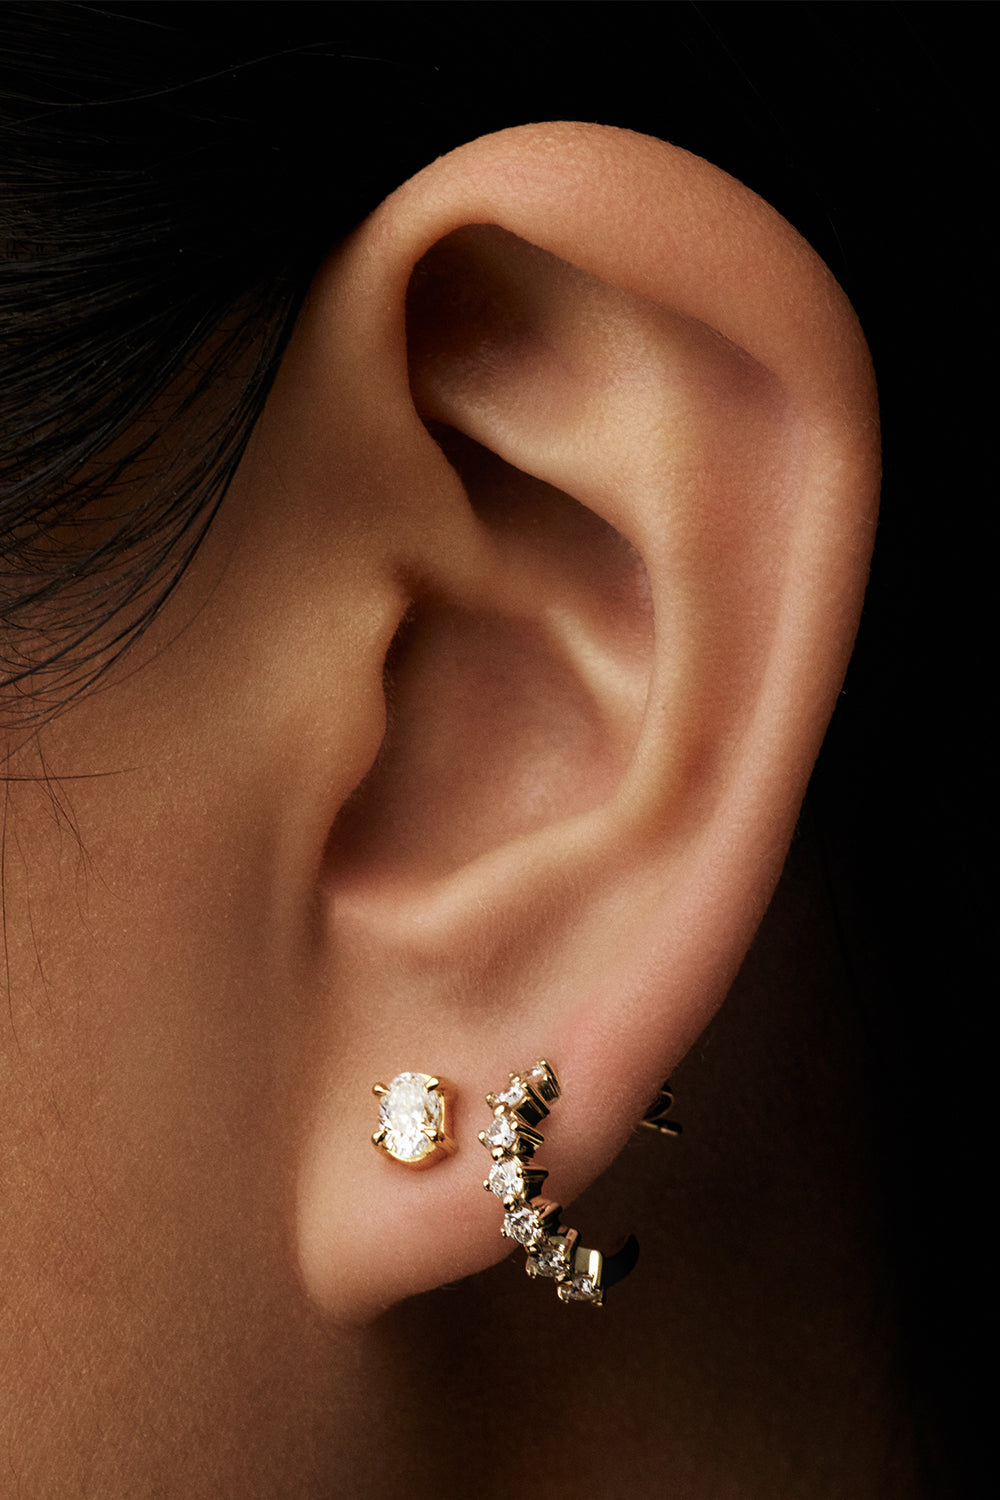 Oval Diamond Stud Earrings | 18K Yellow Gold